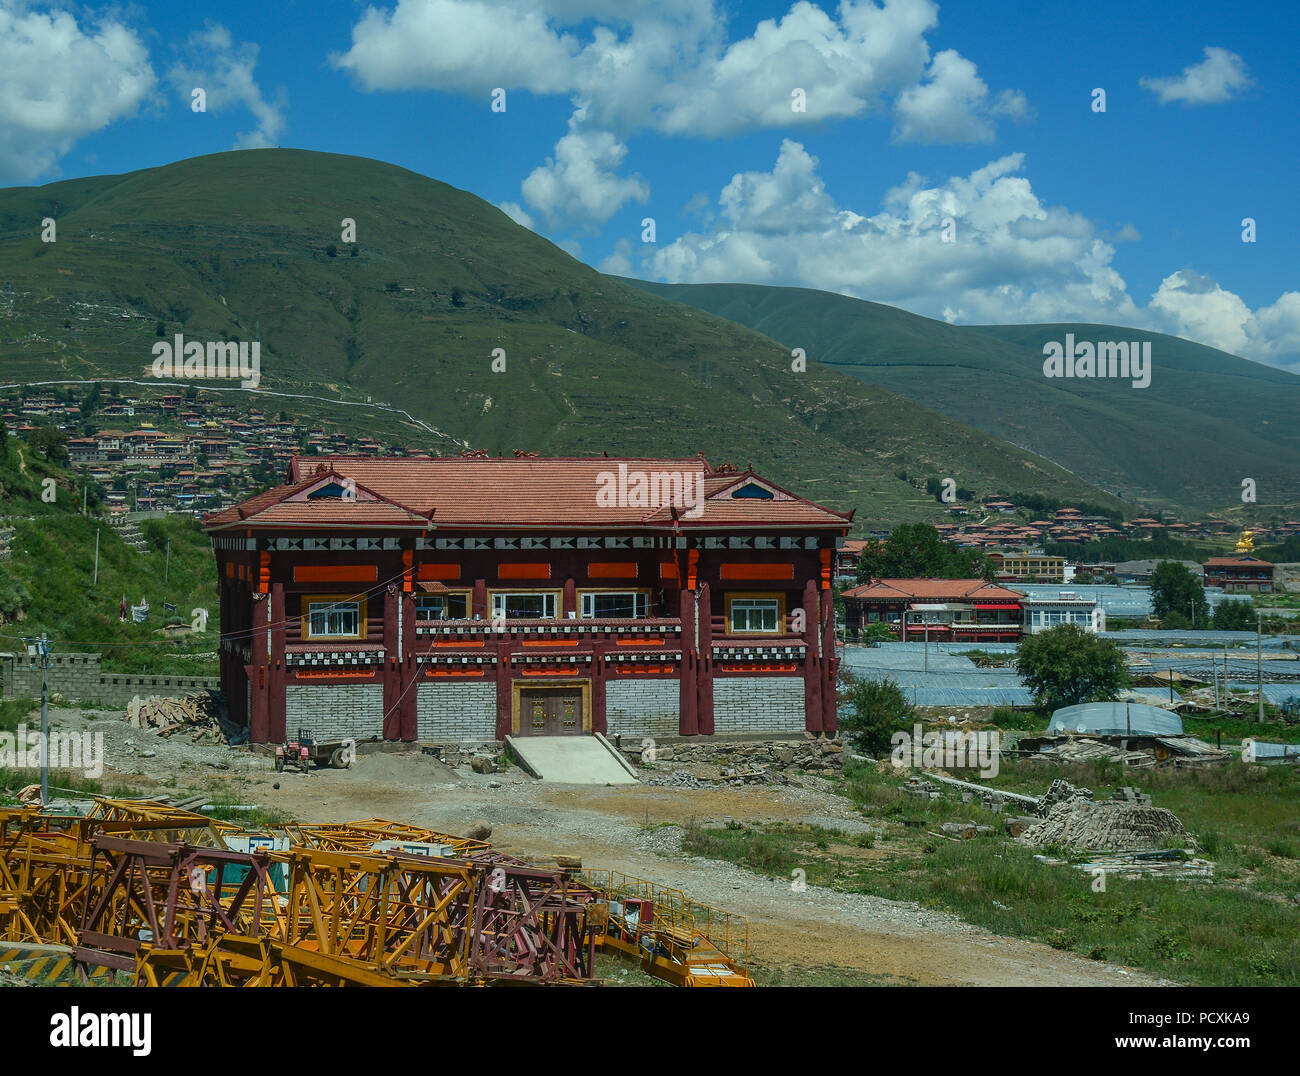 Daocheng, China - Aug 15, 2016. Mountain township in Daocheng, China. Daocheng is located in the eastern Hengduan Mountains, Sichuan Province. Stock Photo